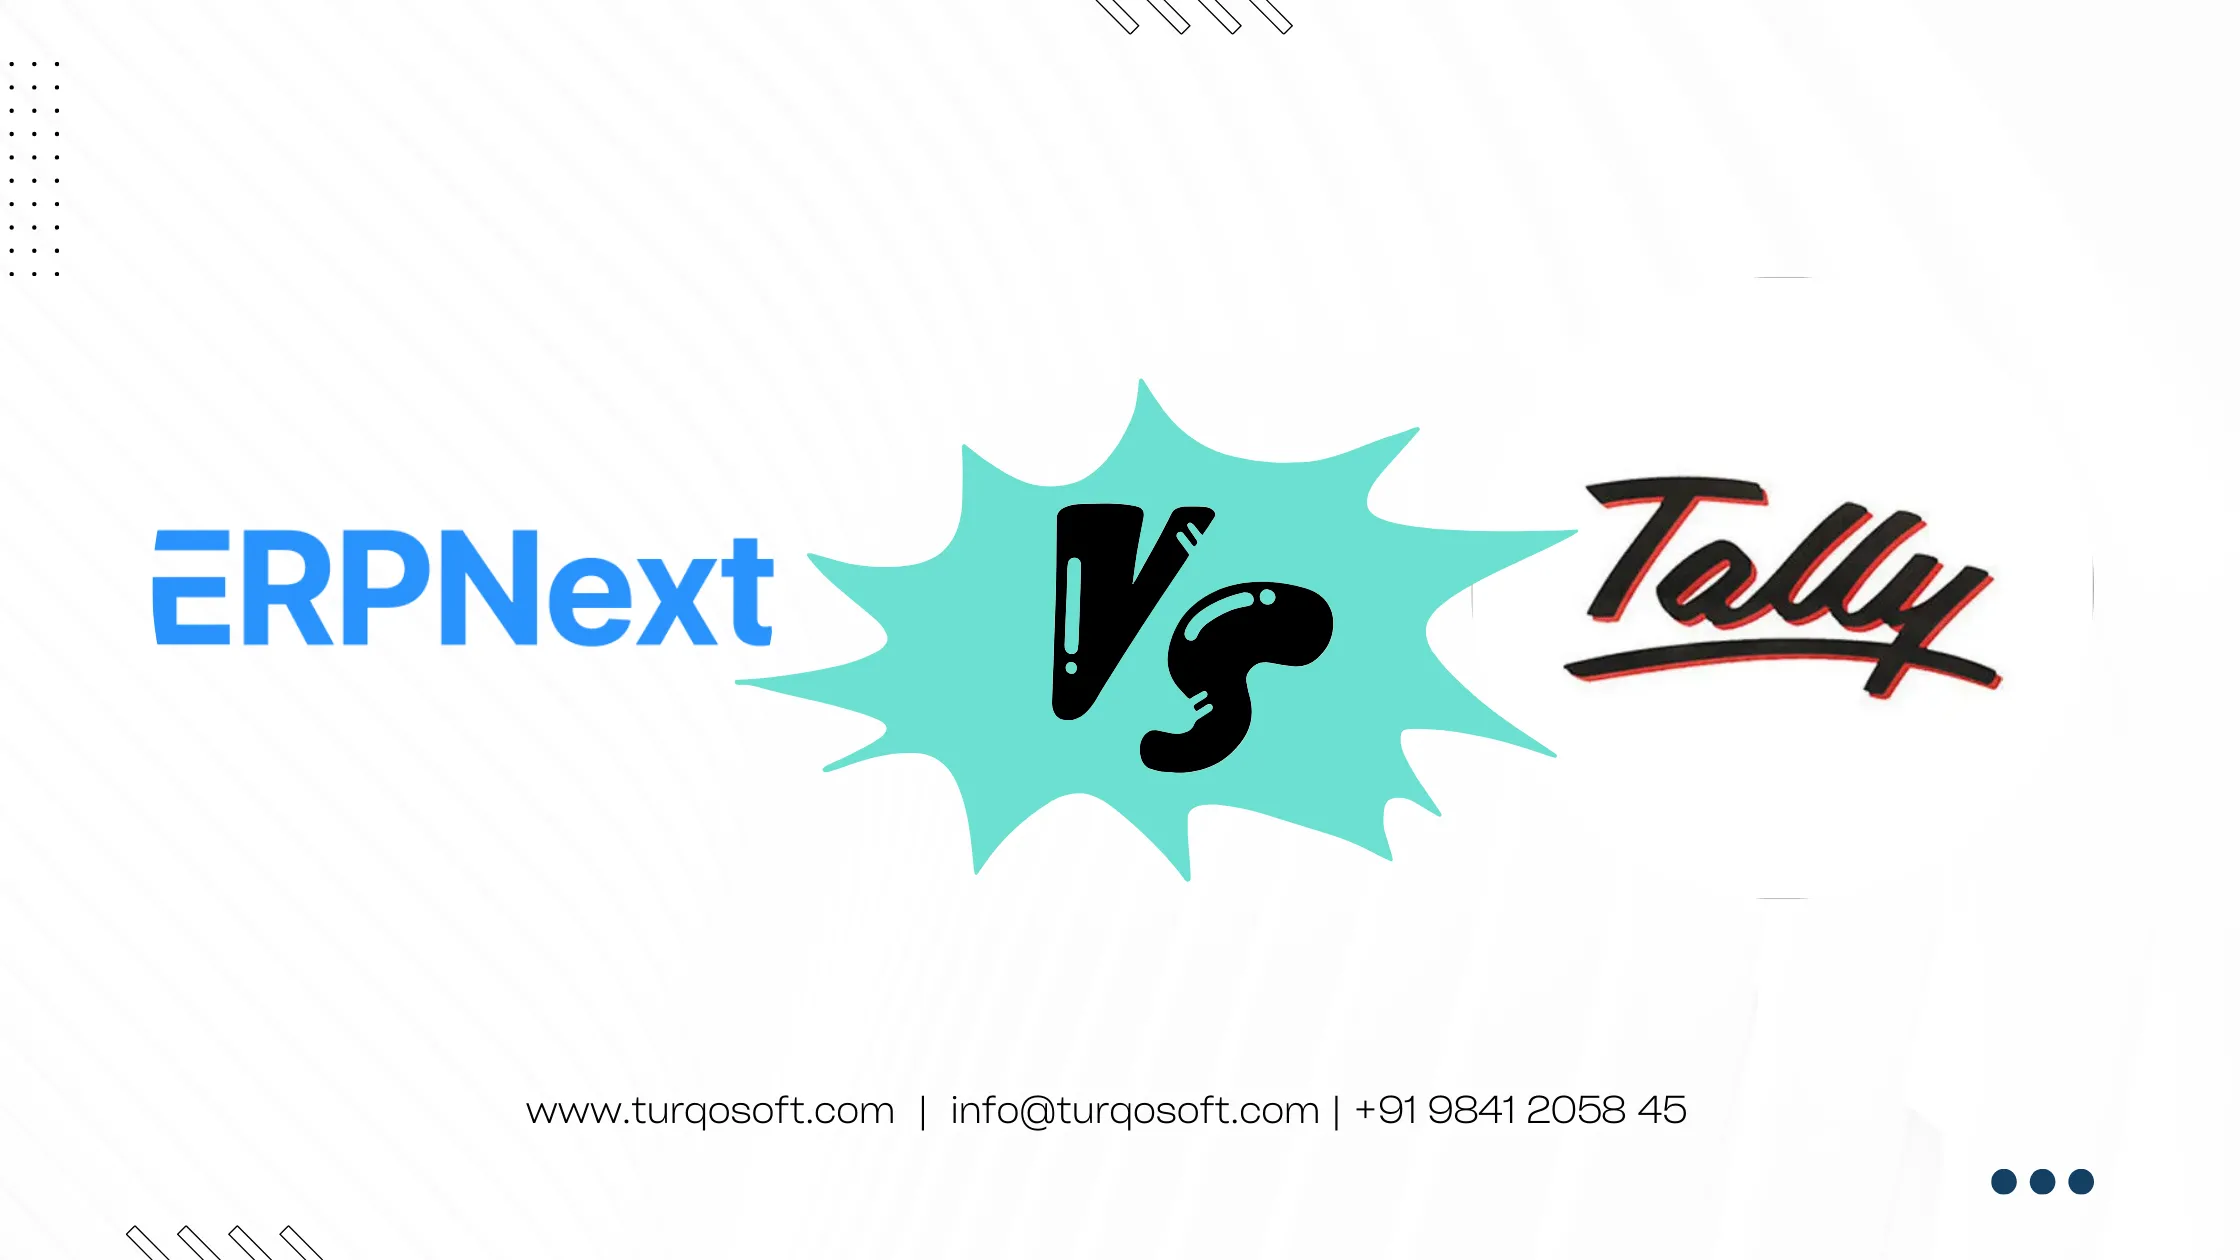 ERPNext vs Tally Software Comparison